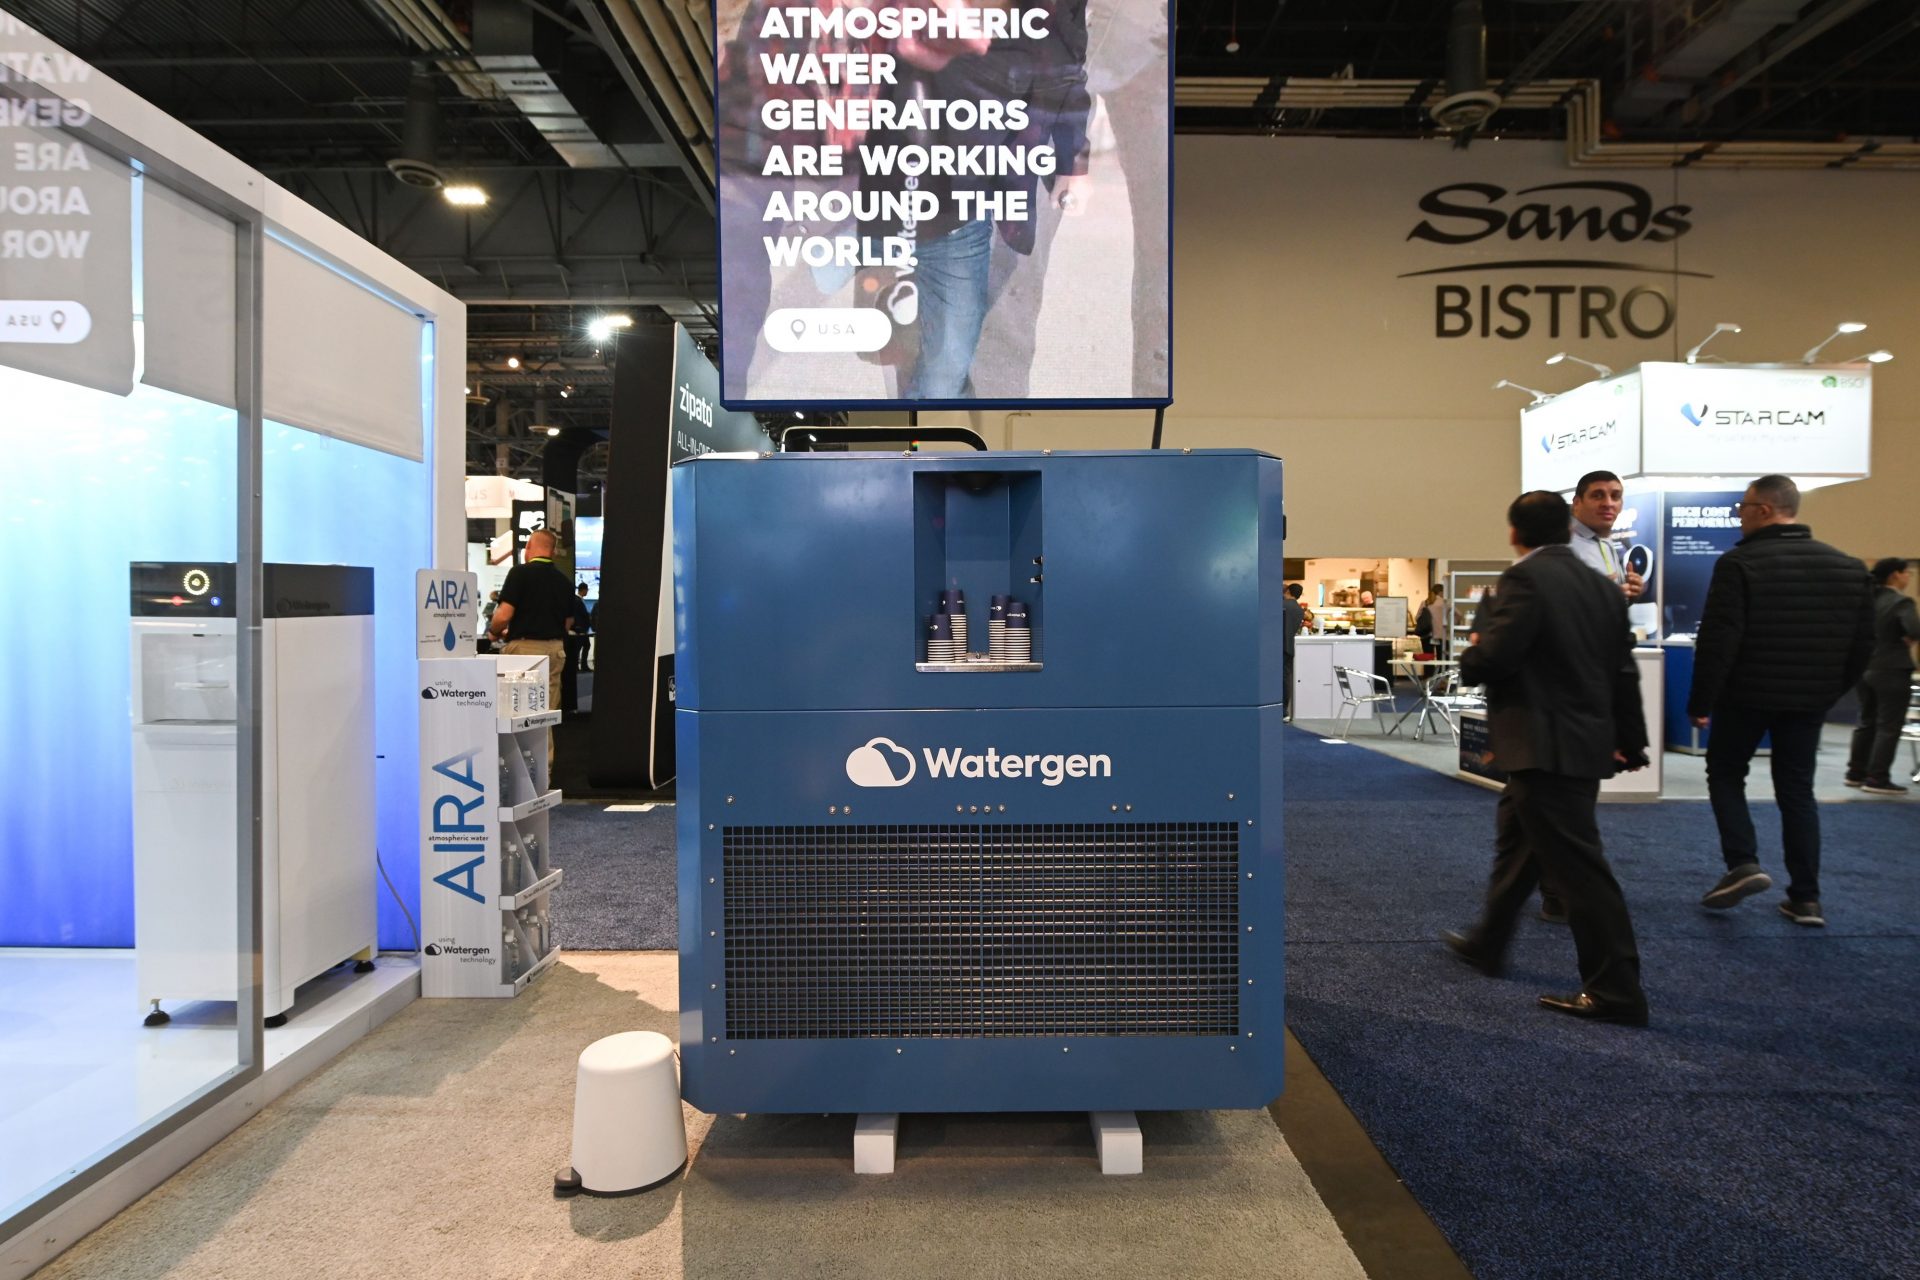 Atmospheric water generators